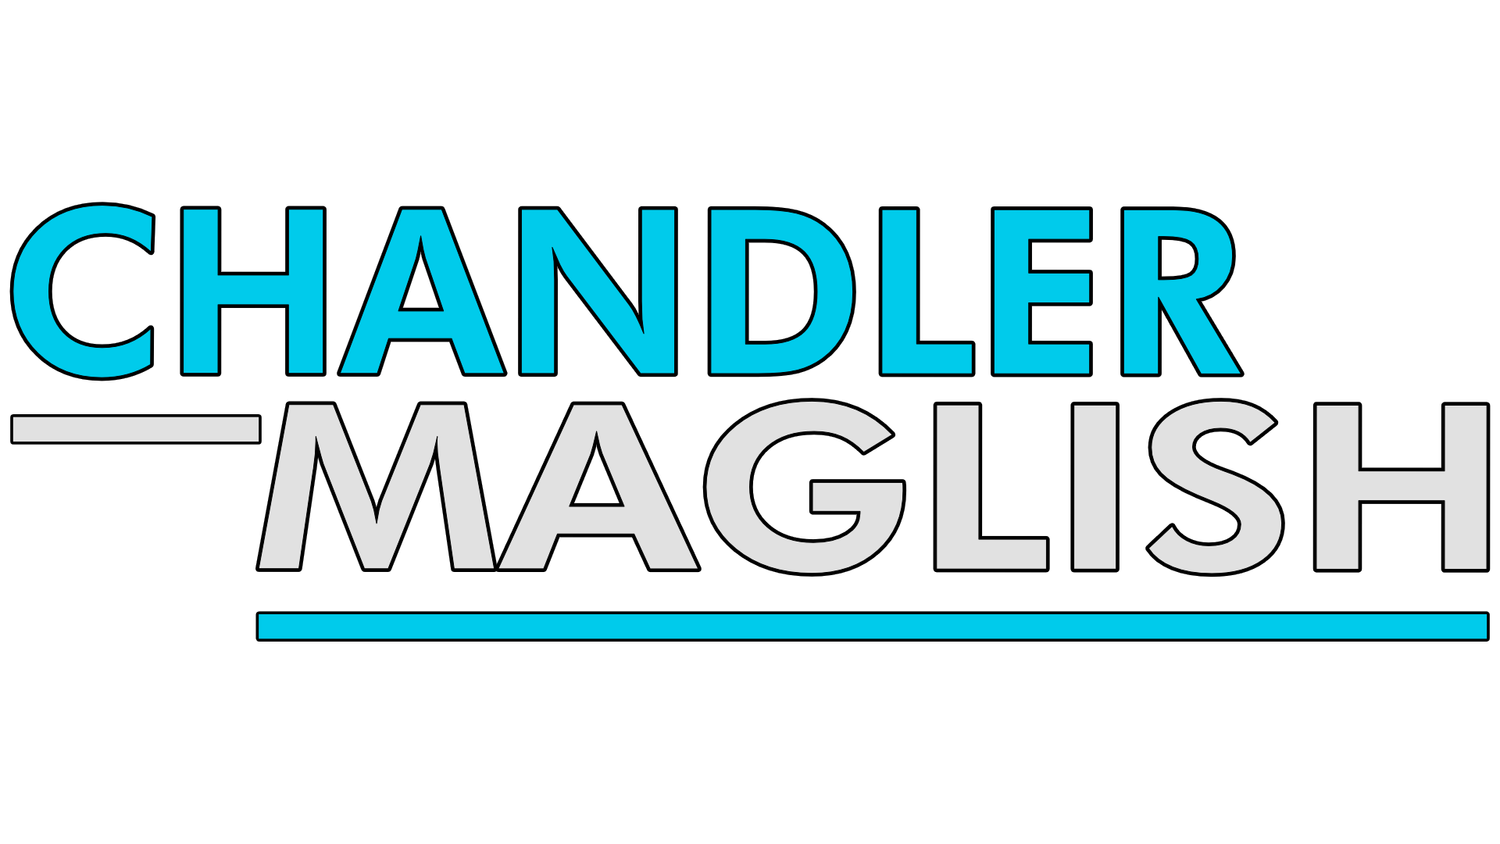 Chandler Maglish Magician